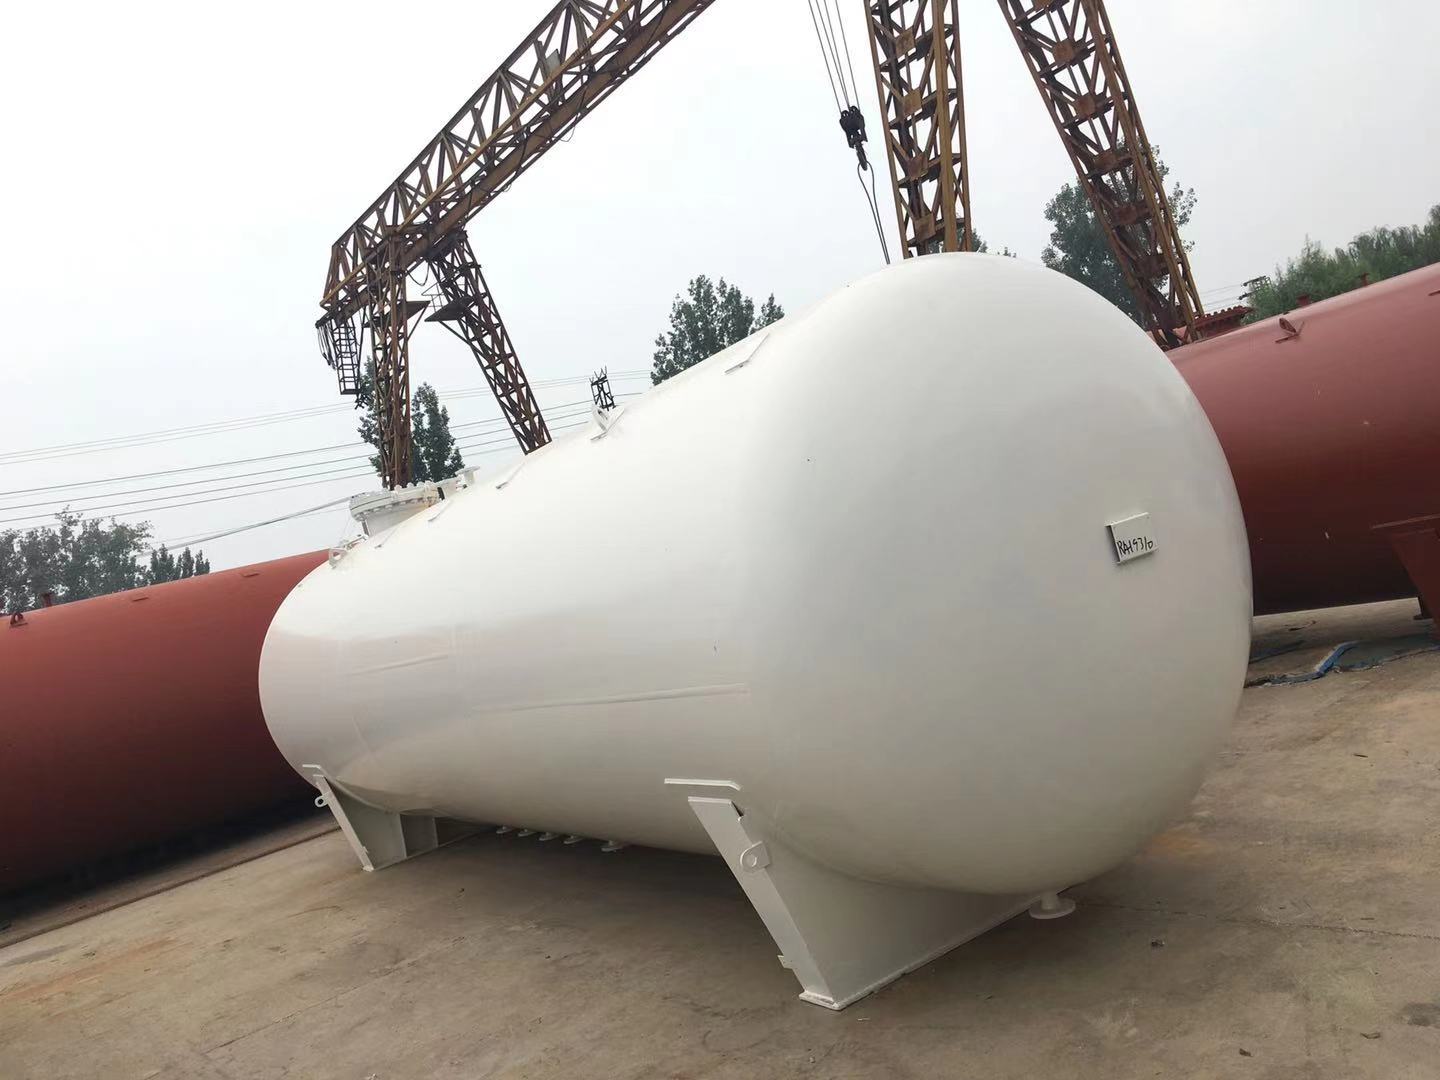 Advantages of liquefied gas storage tanks